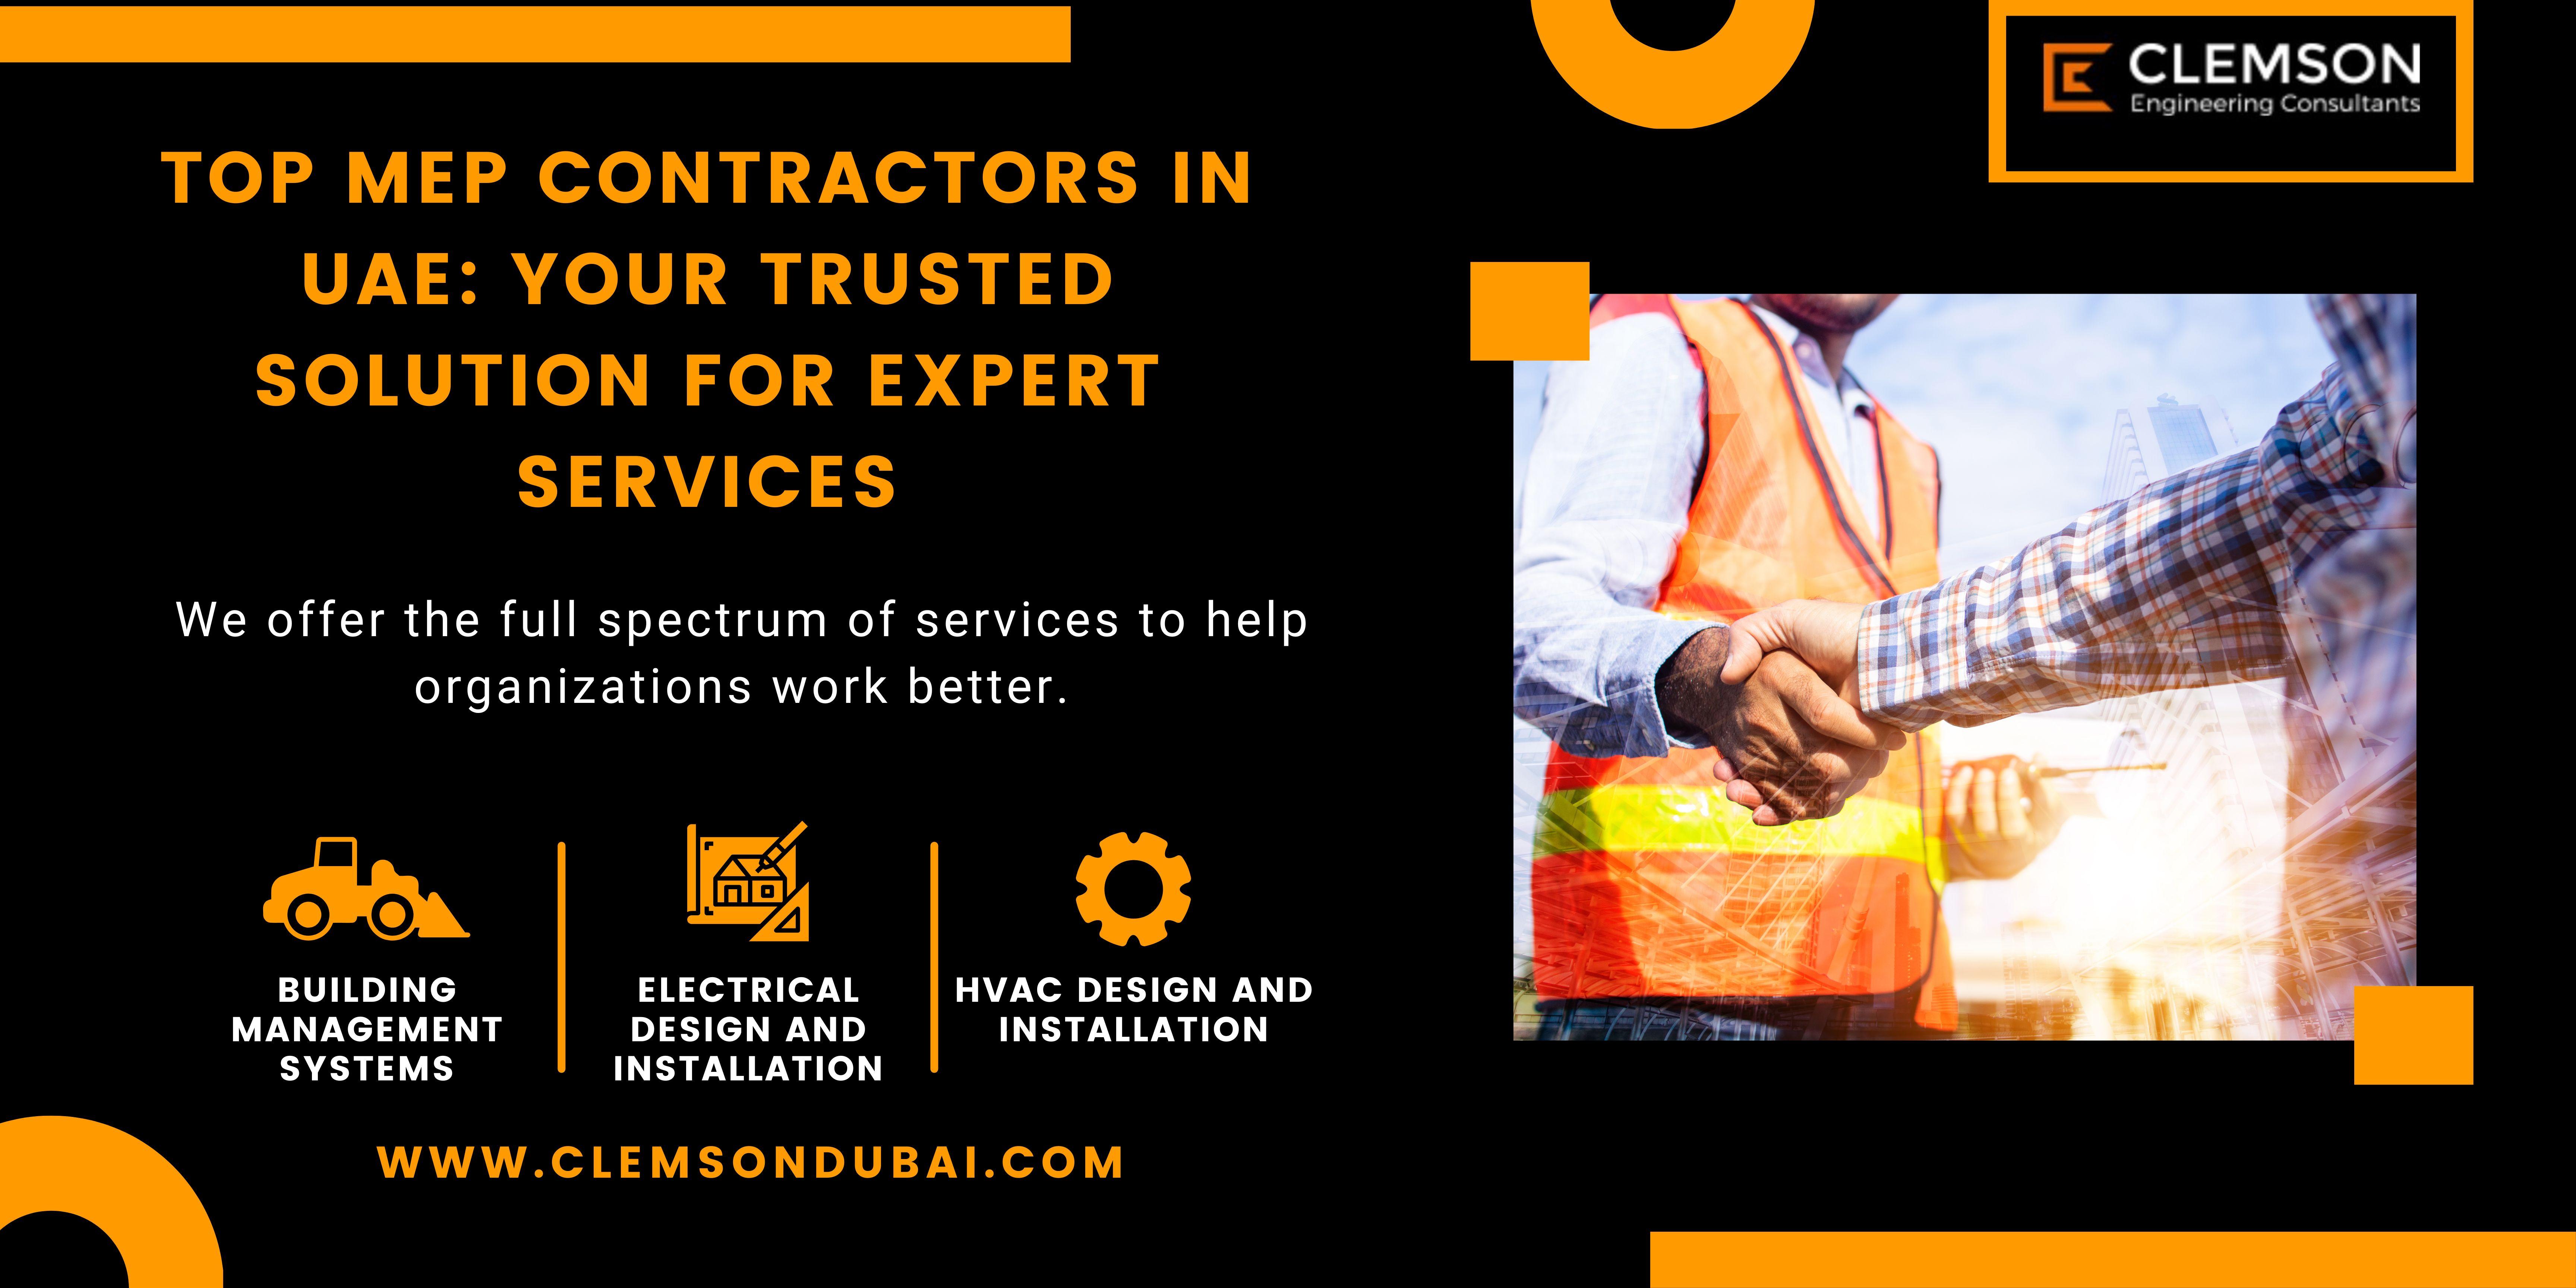 Top MEP Contractors in UAE: Your Trusted Solution for Expert Ser - JustPaste.it